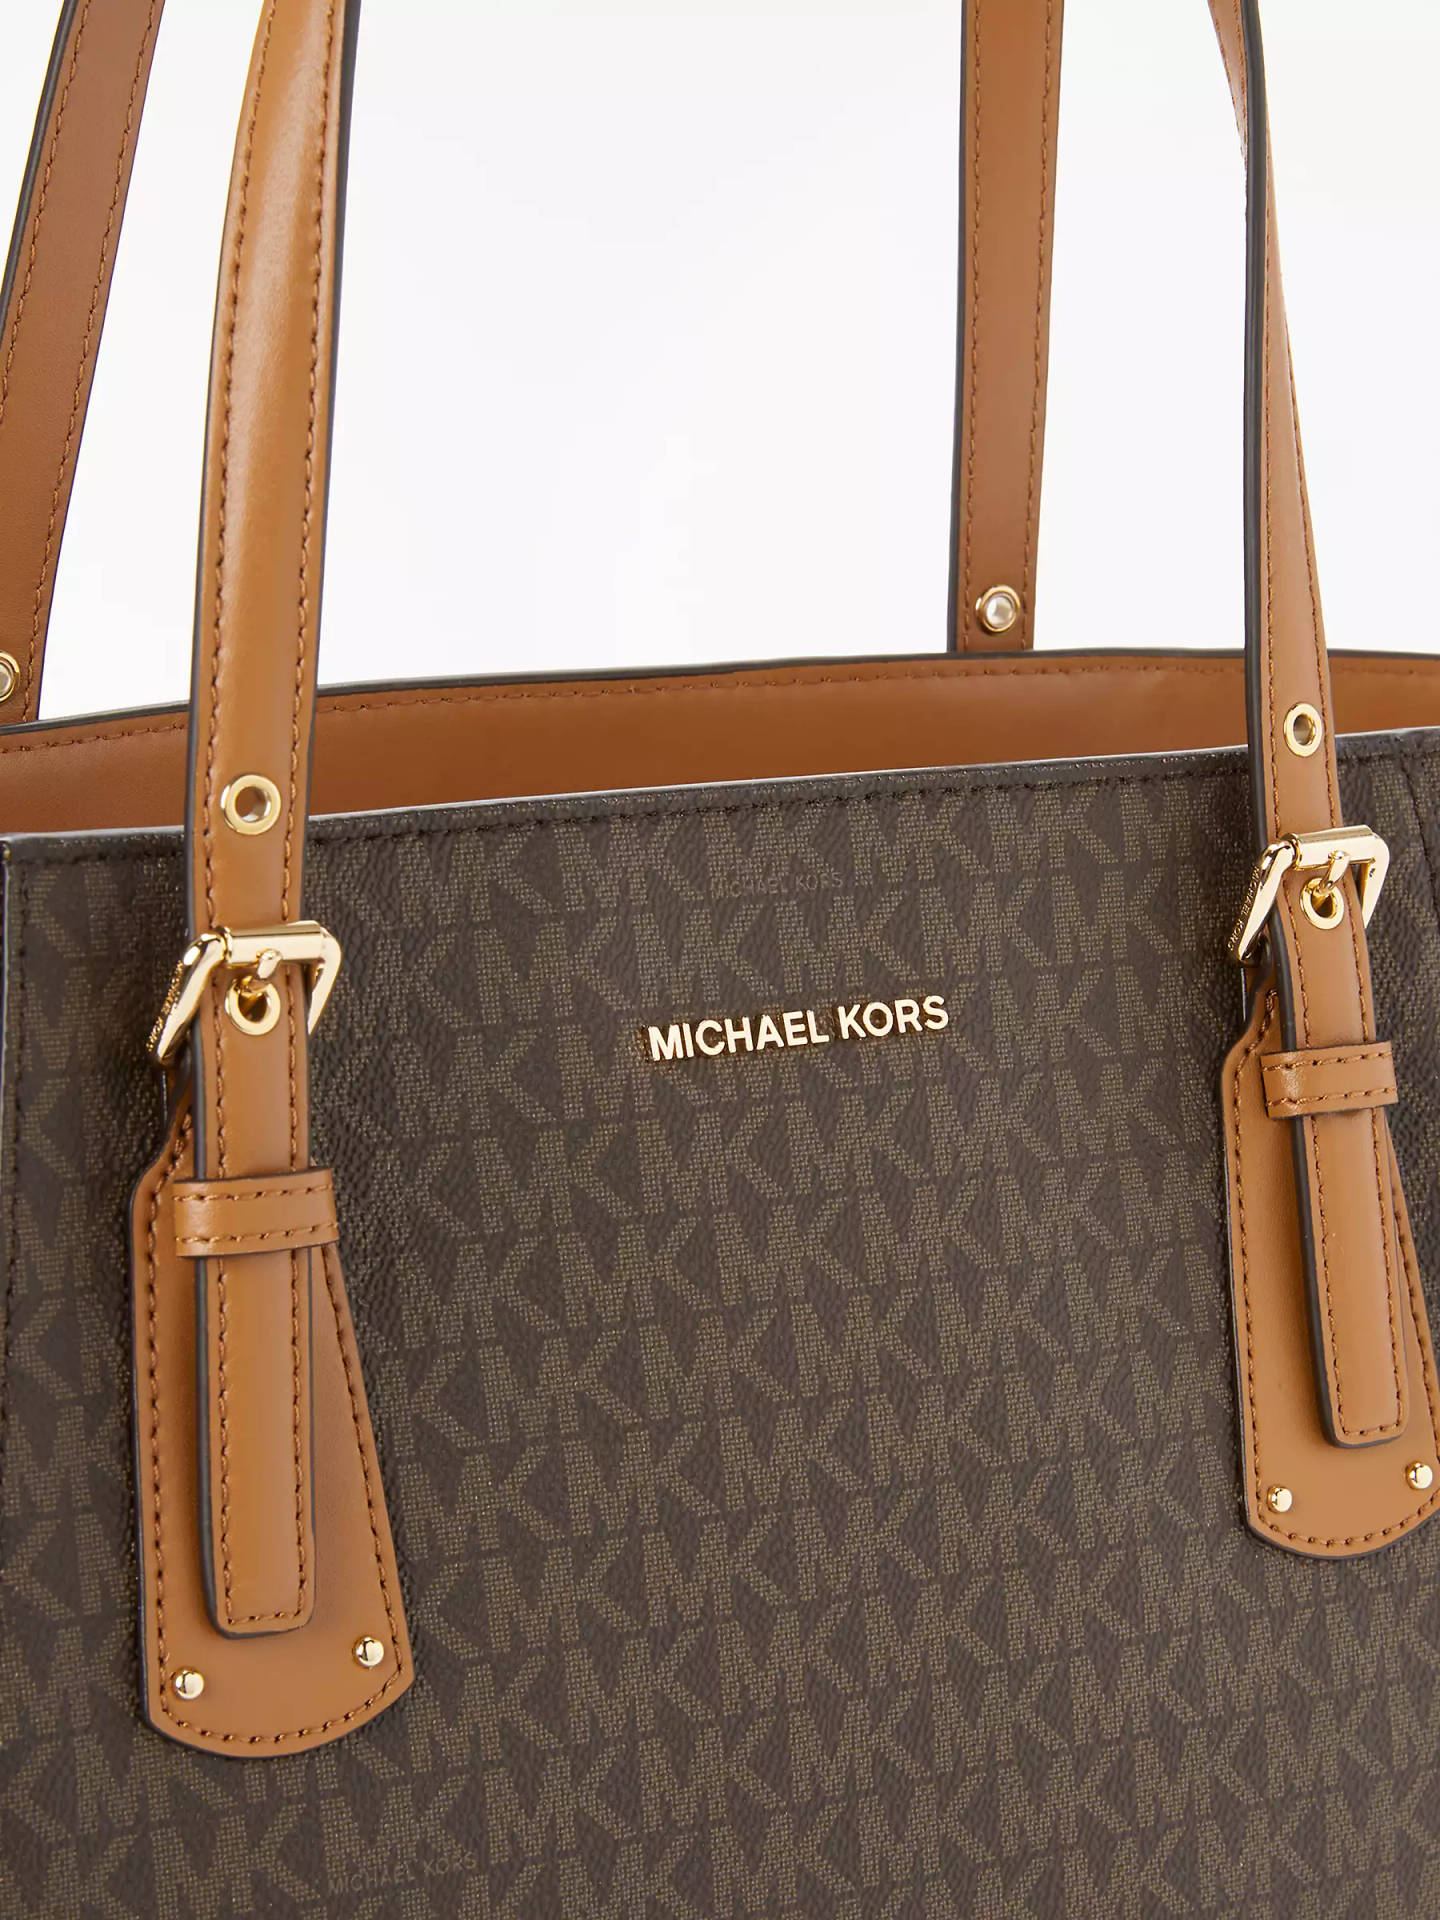 Michael Kors Classic Bag Design Background